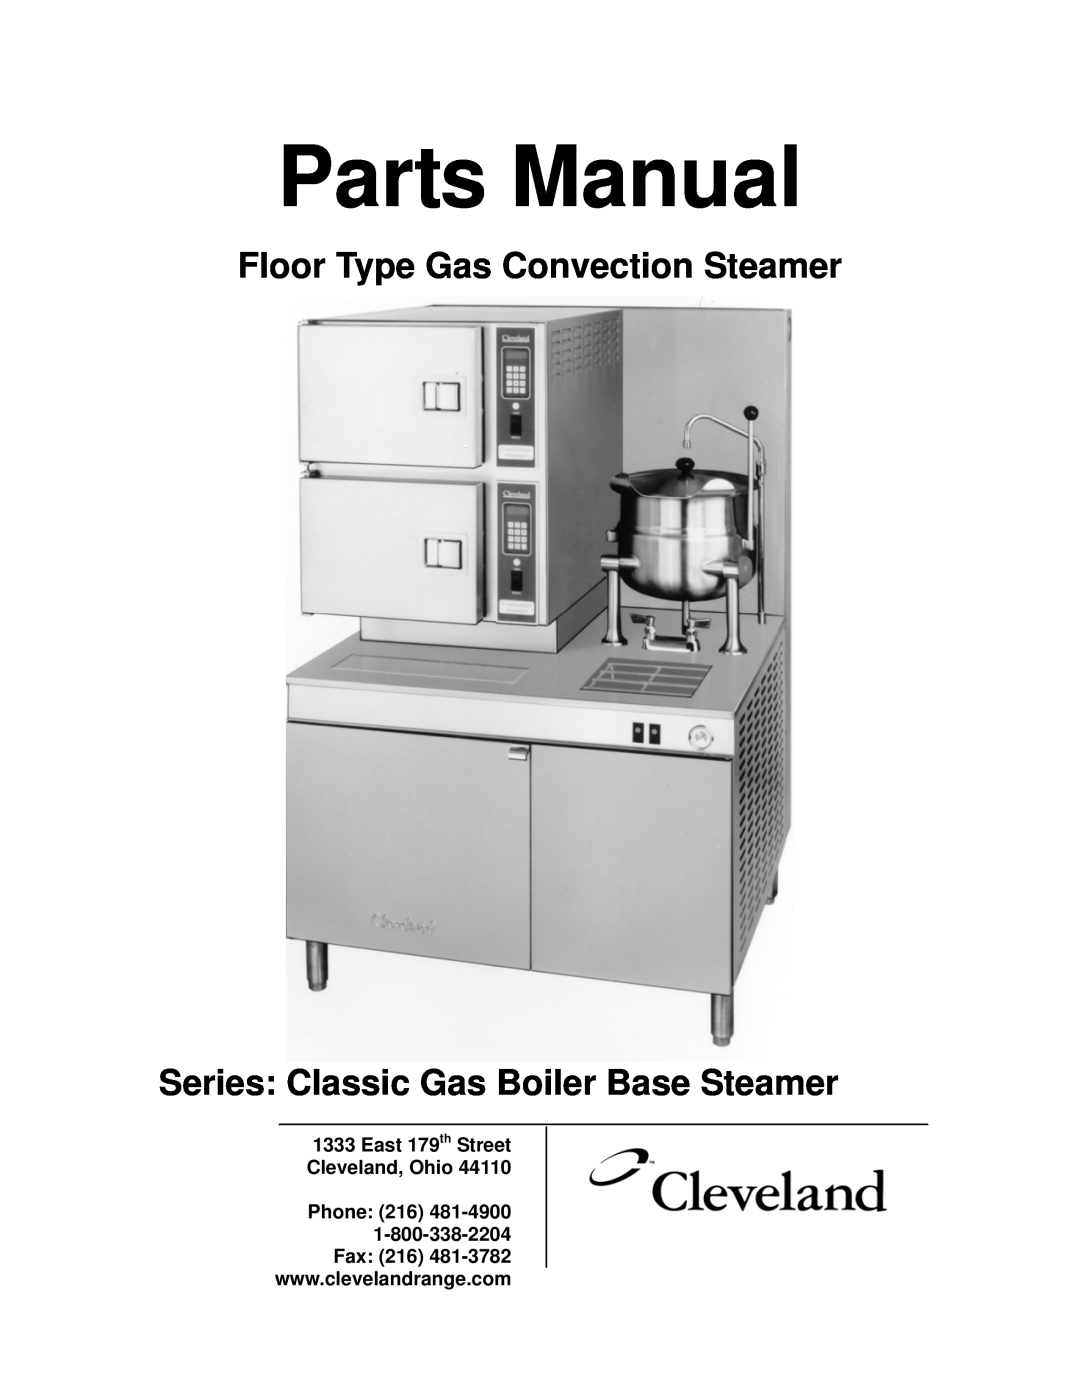 Cleveland Range KE50151-E manual Parts Manual, Floor Type Gas Convection Steamer, Series Classic Gas Boiler Base Steamer 